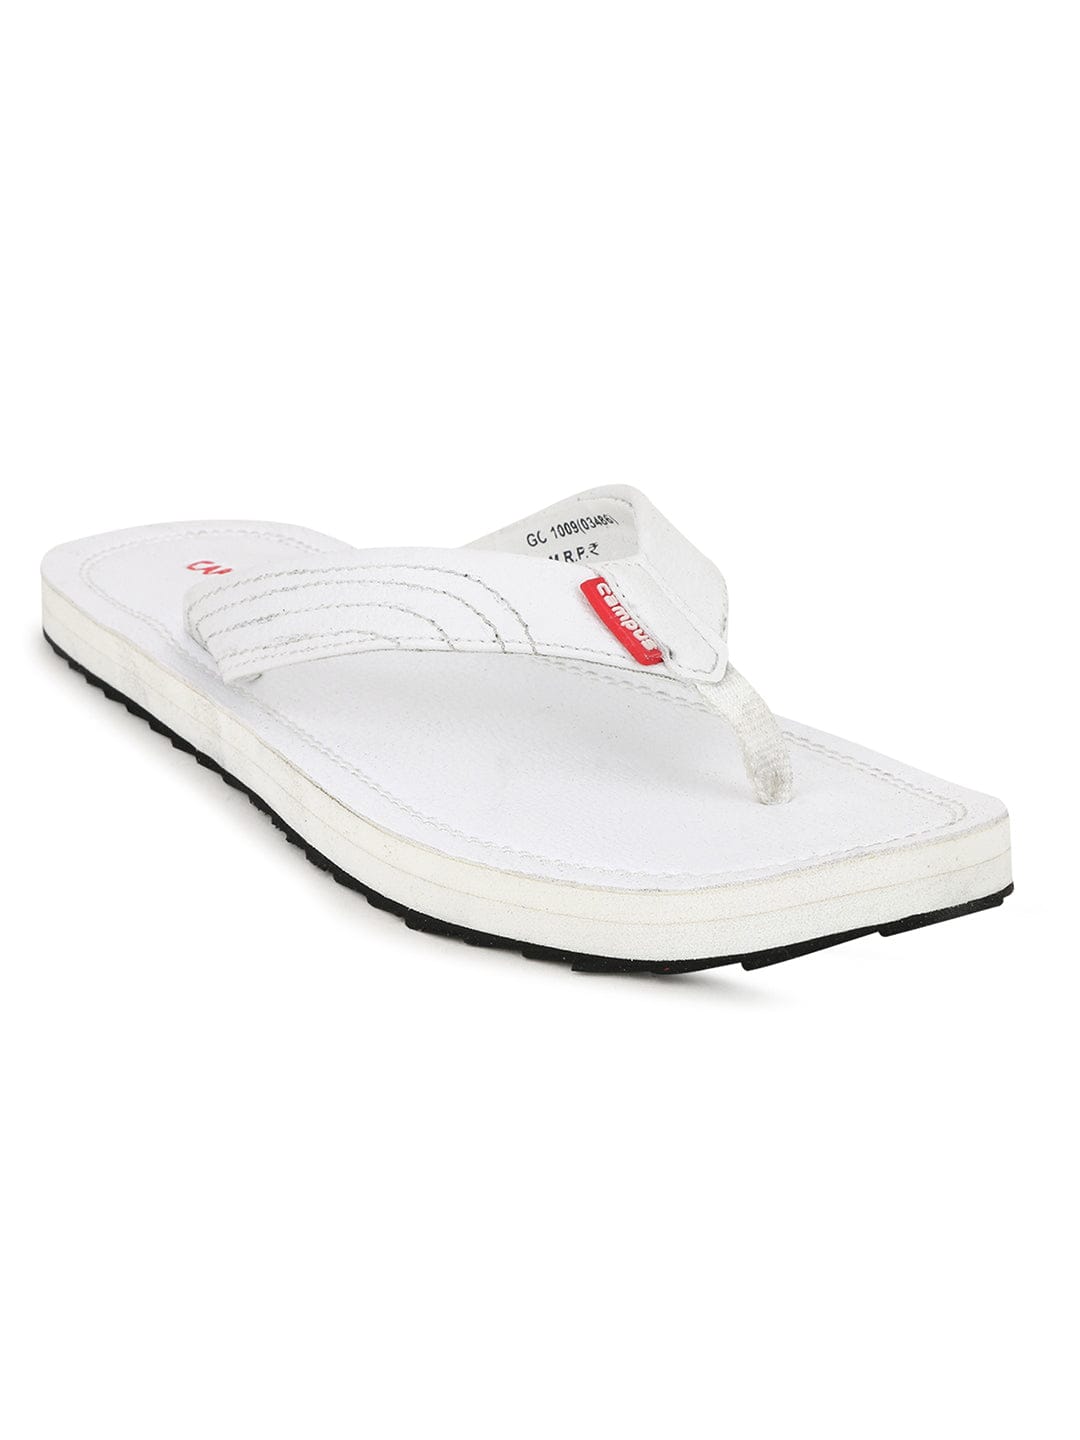 Buy White Sports Sandals for Women by Puma Online | Ajio.com